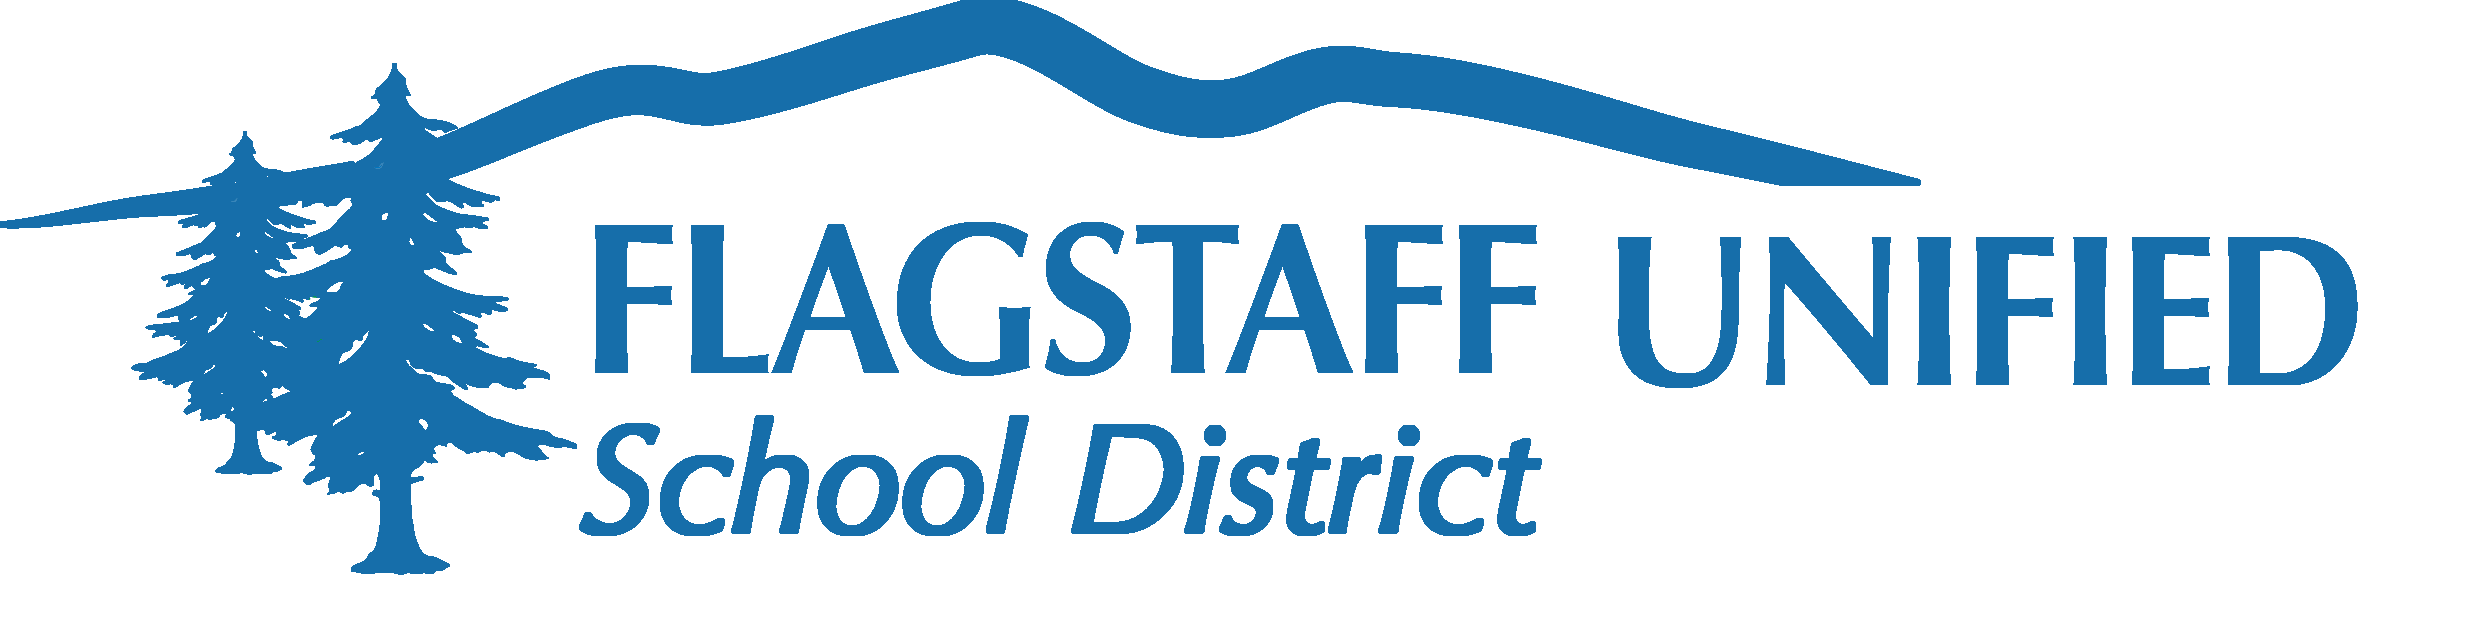 Flagstaff Unified School District logo